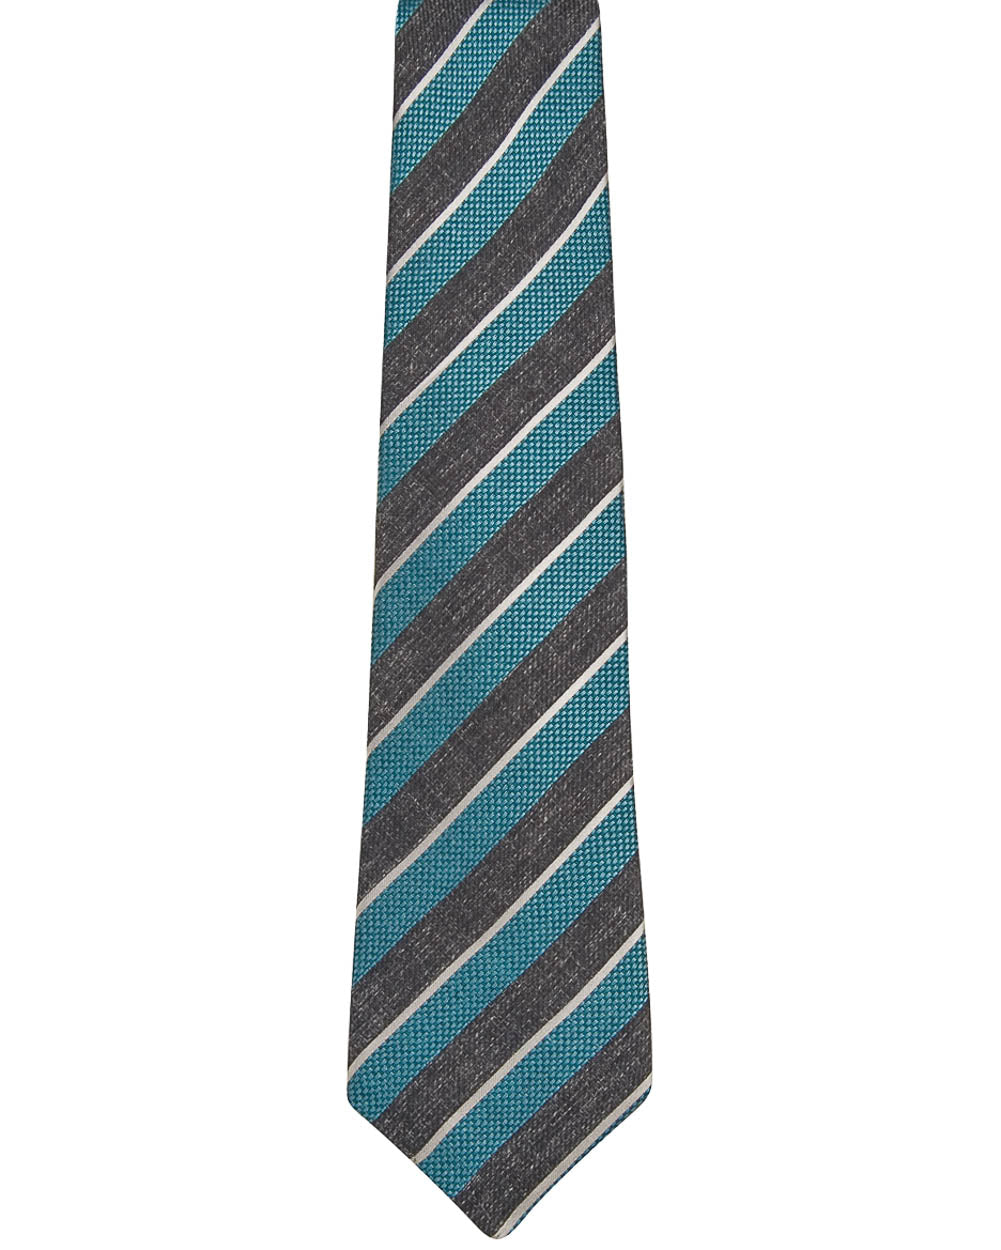 Denim and Cerulean Stripe Tie